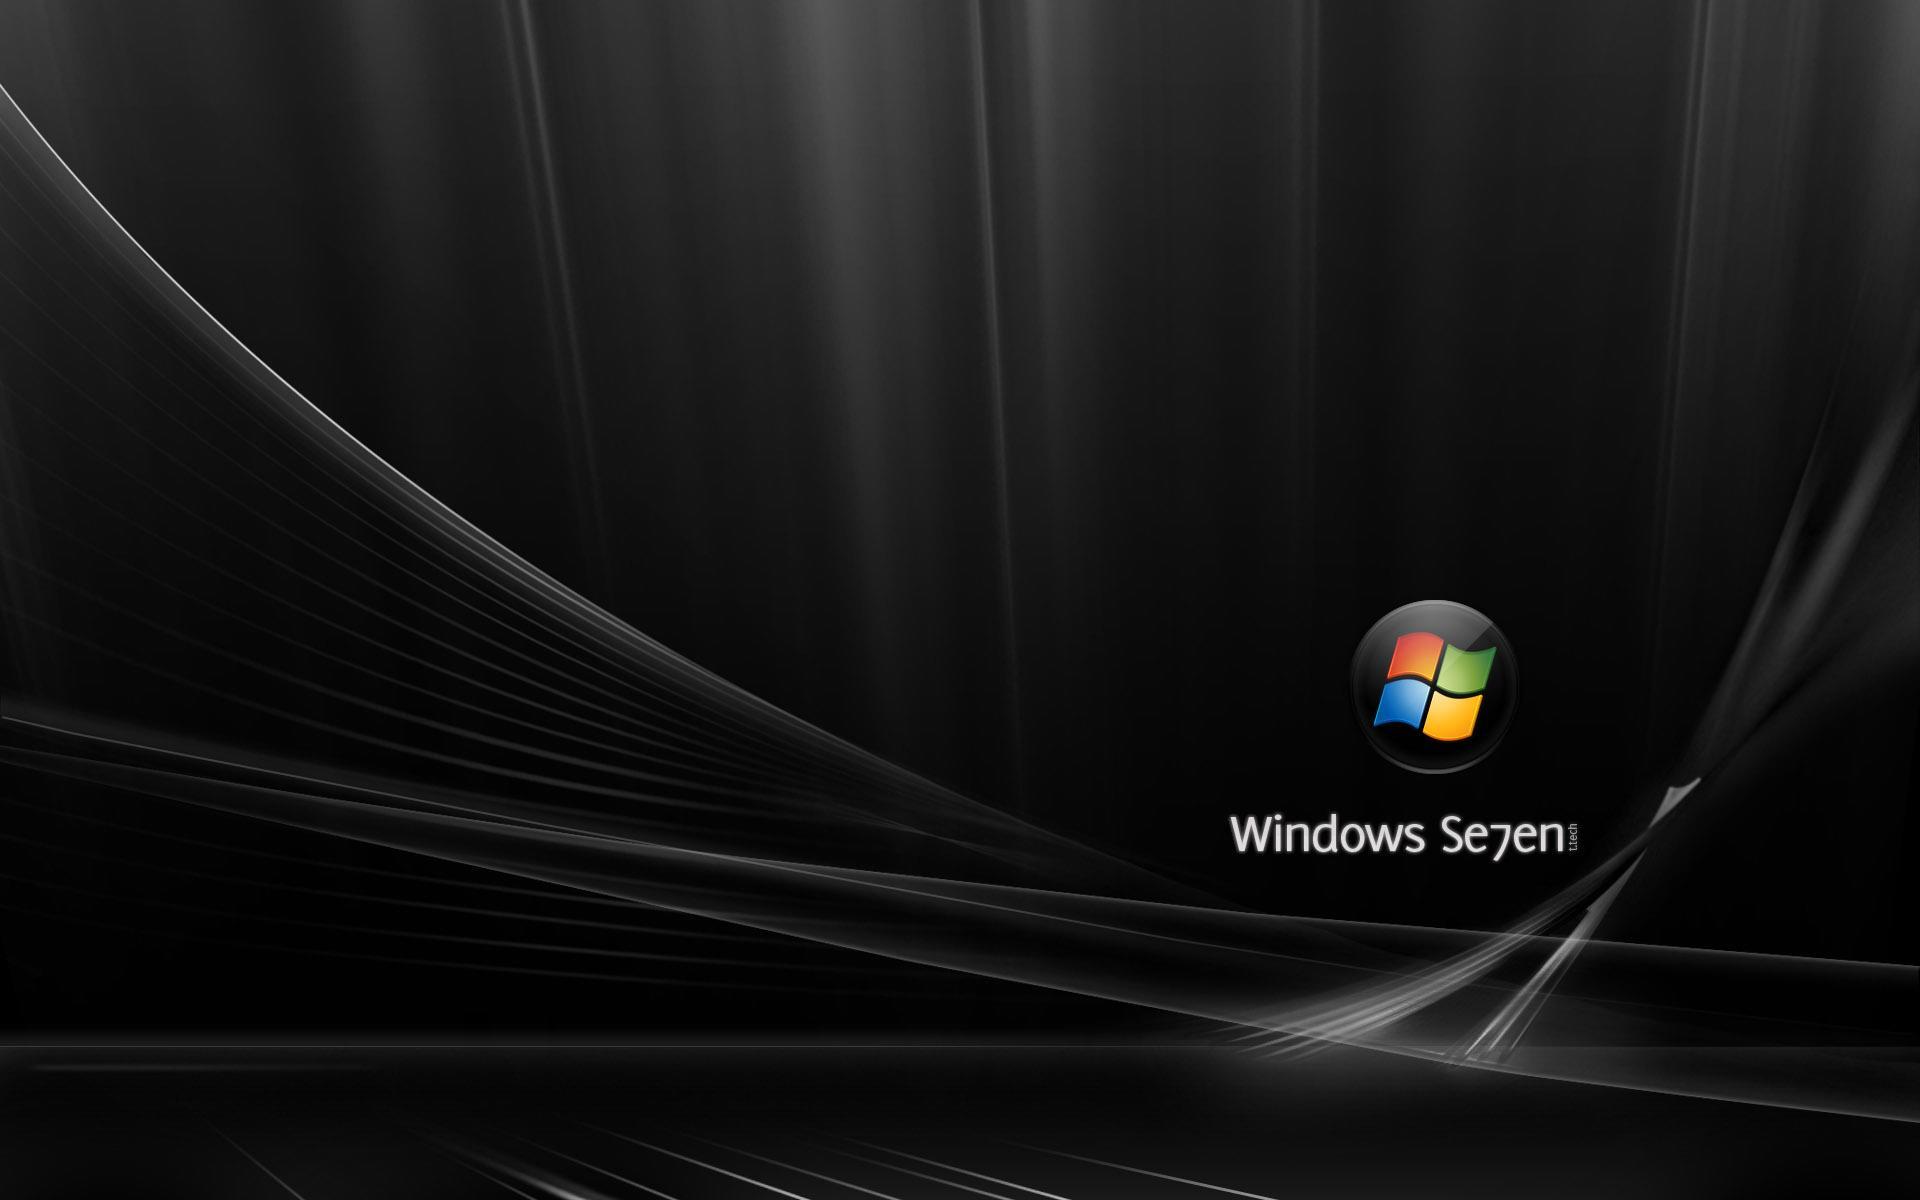 Windows 7 Ultimate Wallpapers HD - Wallpaper Cave